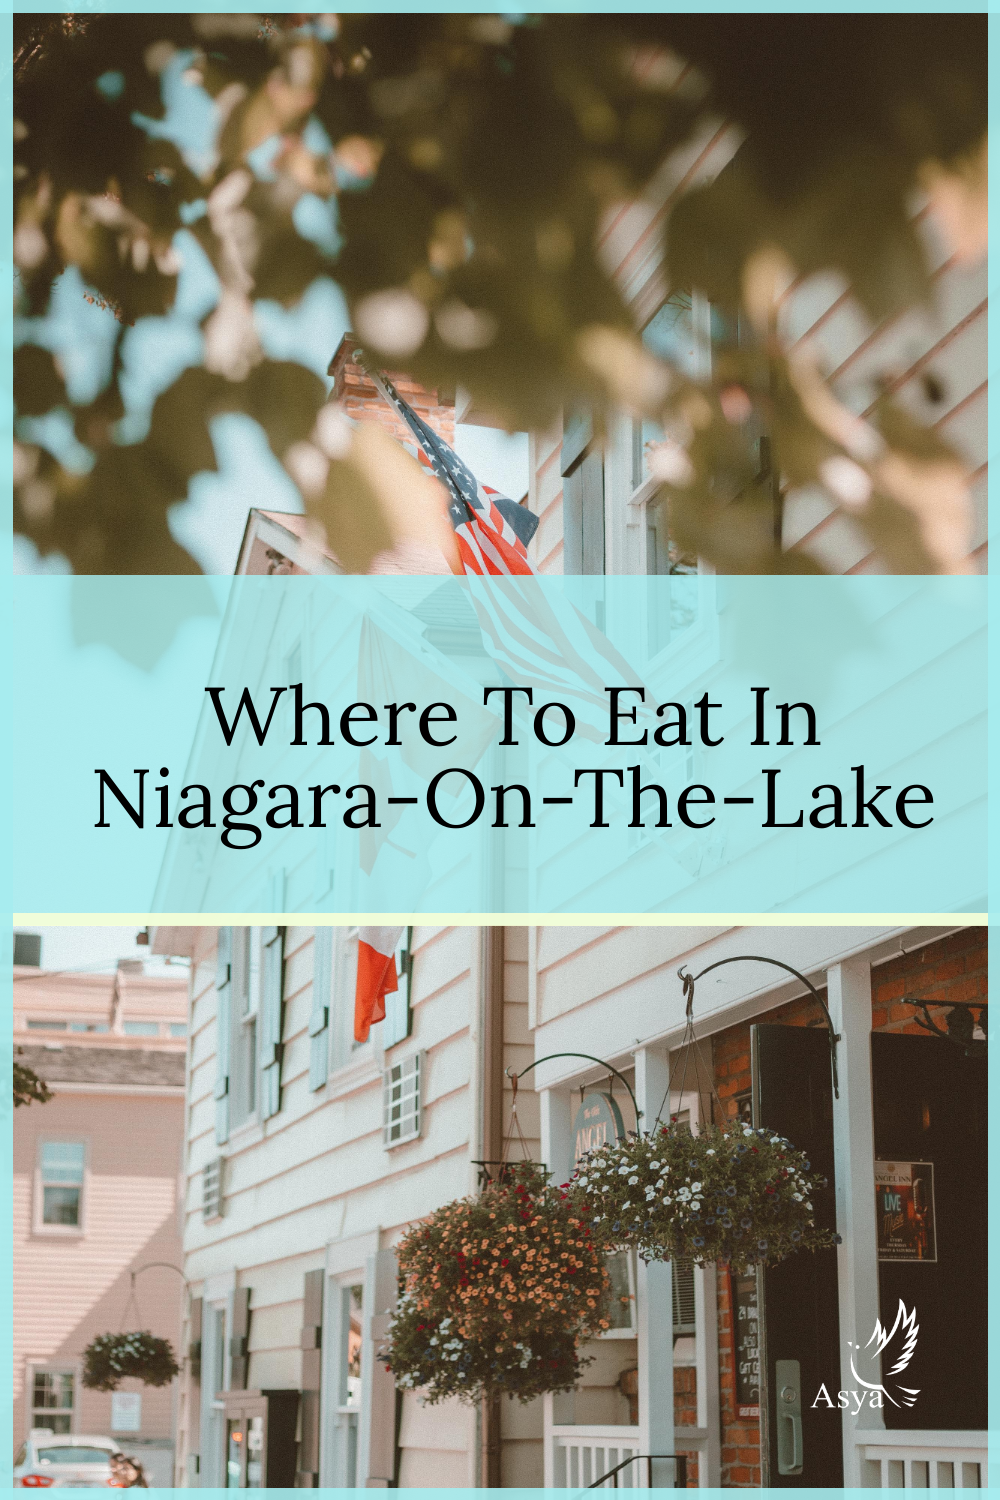 Where To Eat In Niagara-On-The-Lake by Asya.jpg